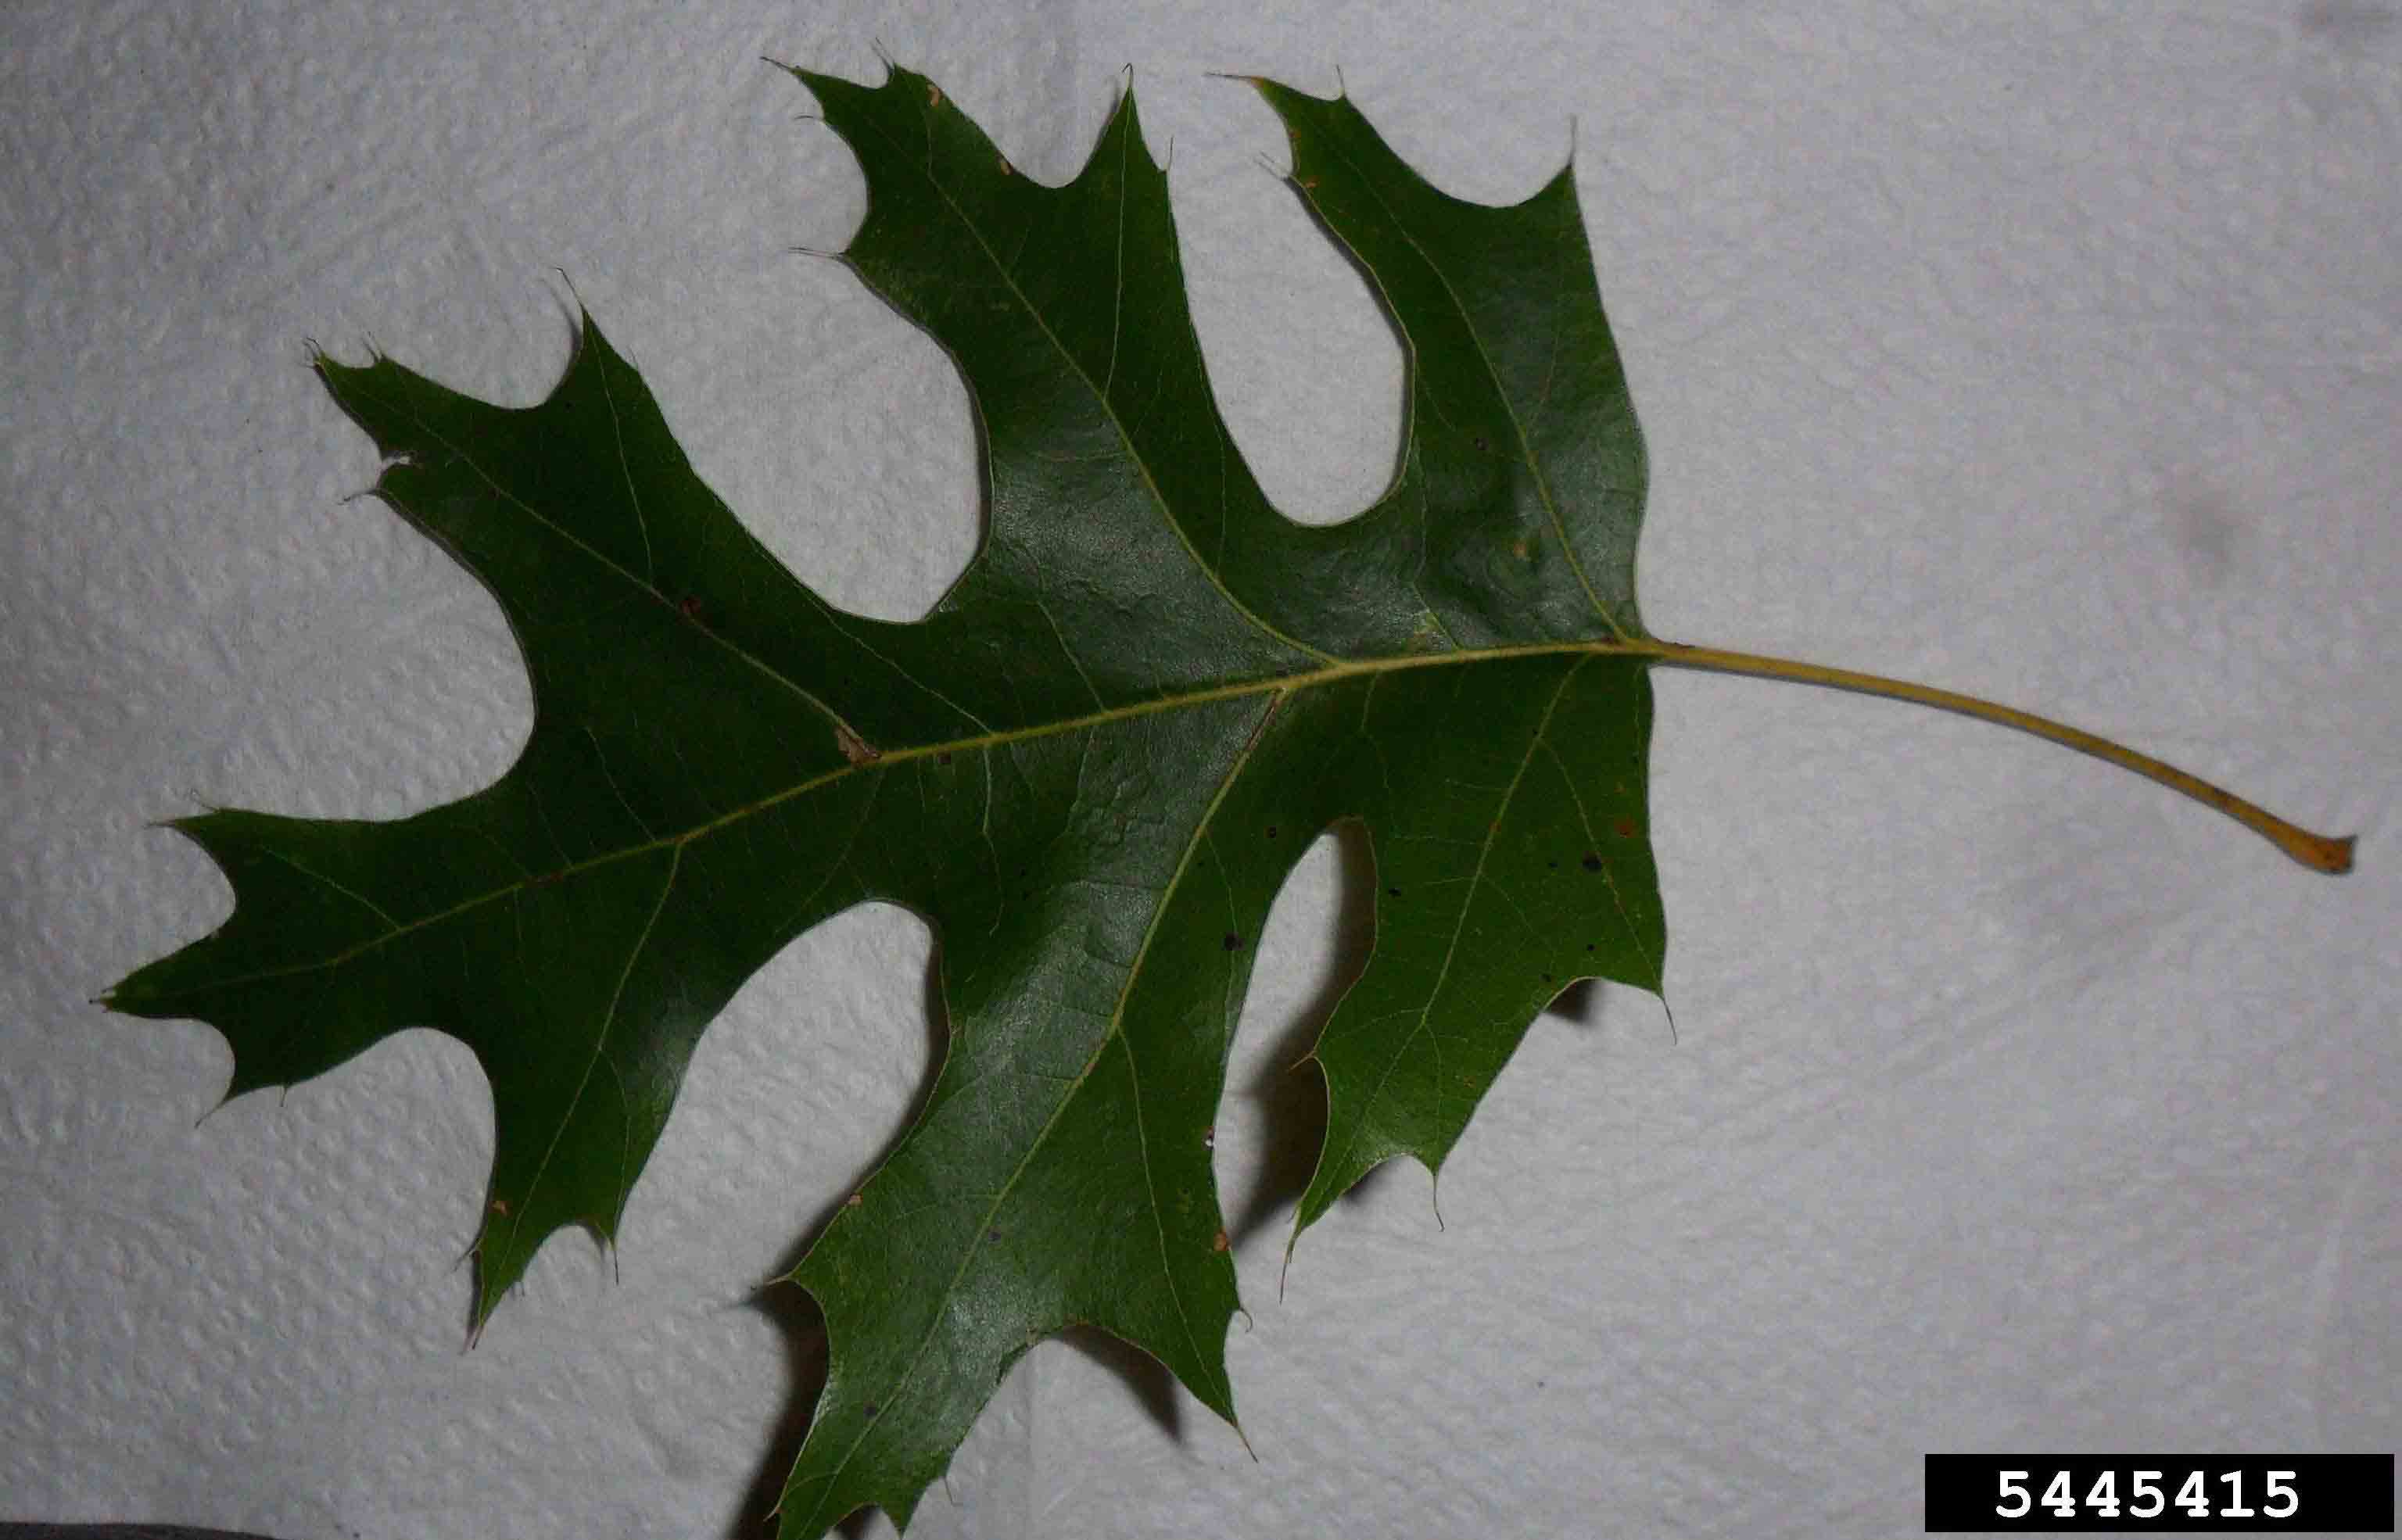 Scarlet oak leaf,  showing lustrous green upper side, deep lobes, and bristles on the tips